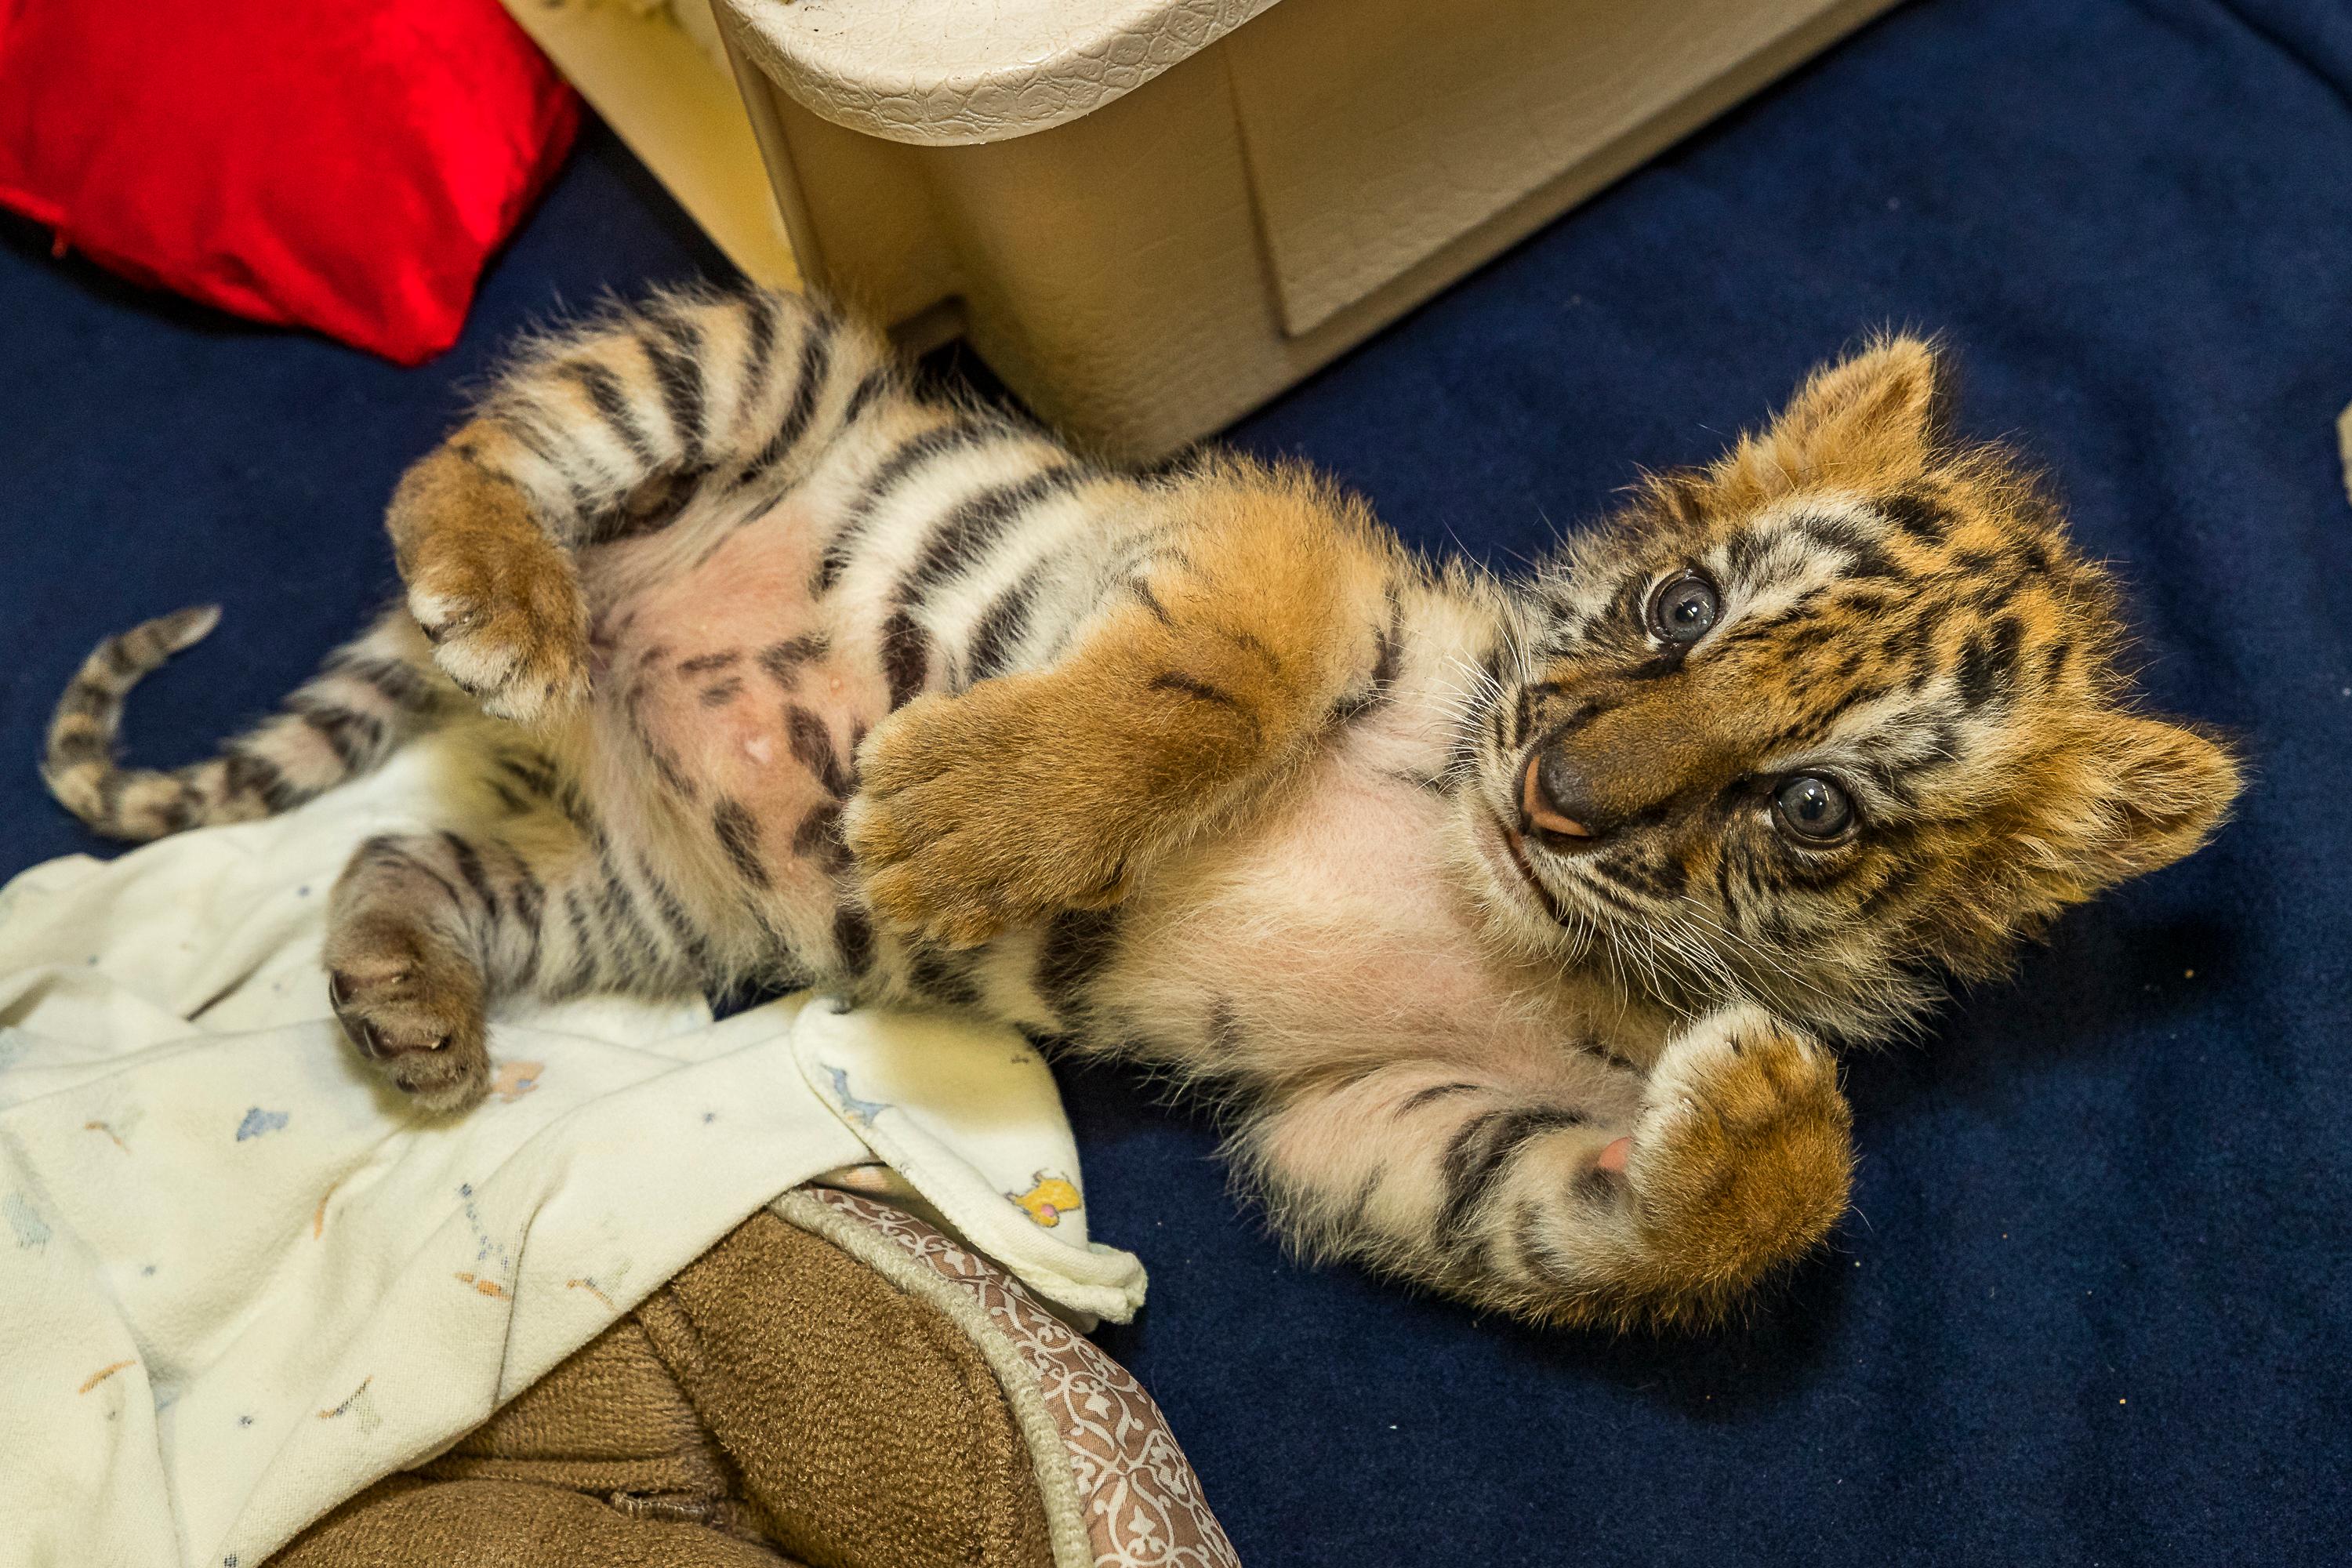 Zoo takes custody of tiger cub seized at border crossing | WJAC